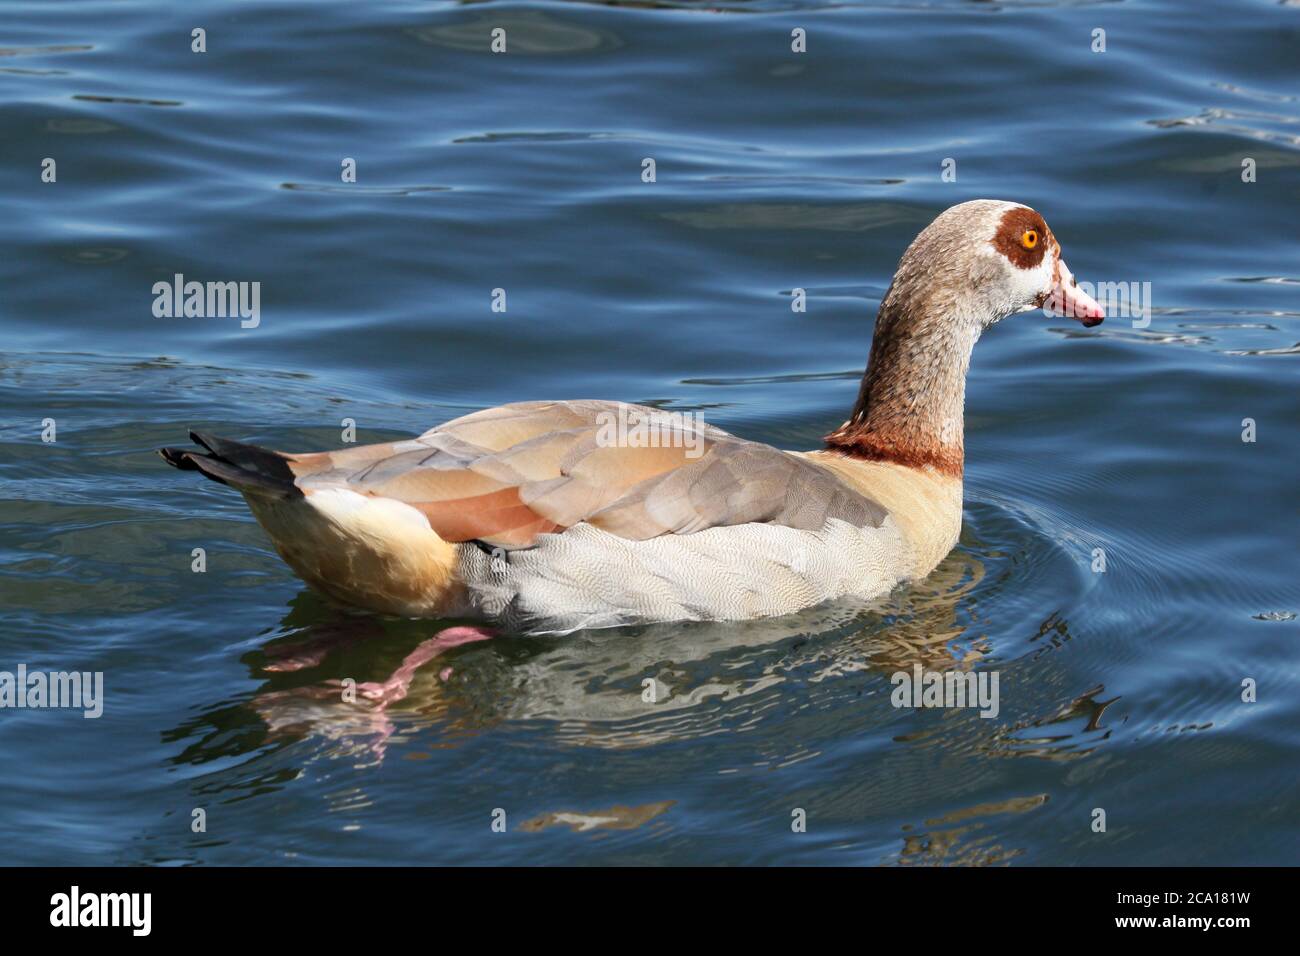 Egyptian Goose (Alopochen aegyptiaca), River Thames, Hampton court, East Molesey, Surrey, Angleterre, Grande-Bretagne, Royaume-Uni, Royaume-Uni, Europe Banque D'Images